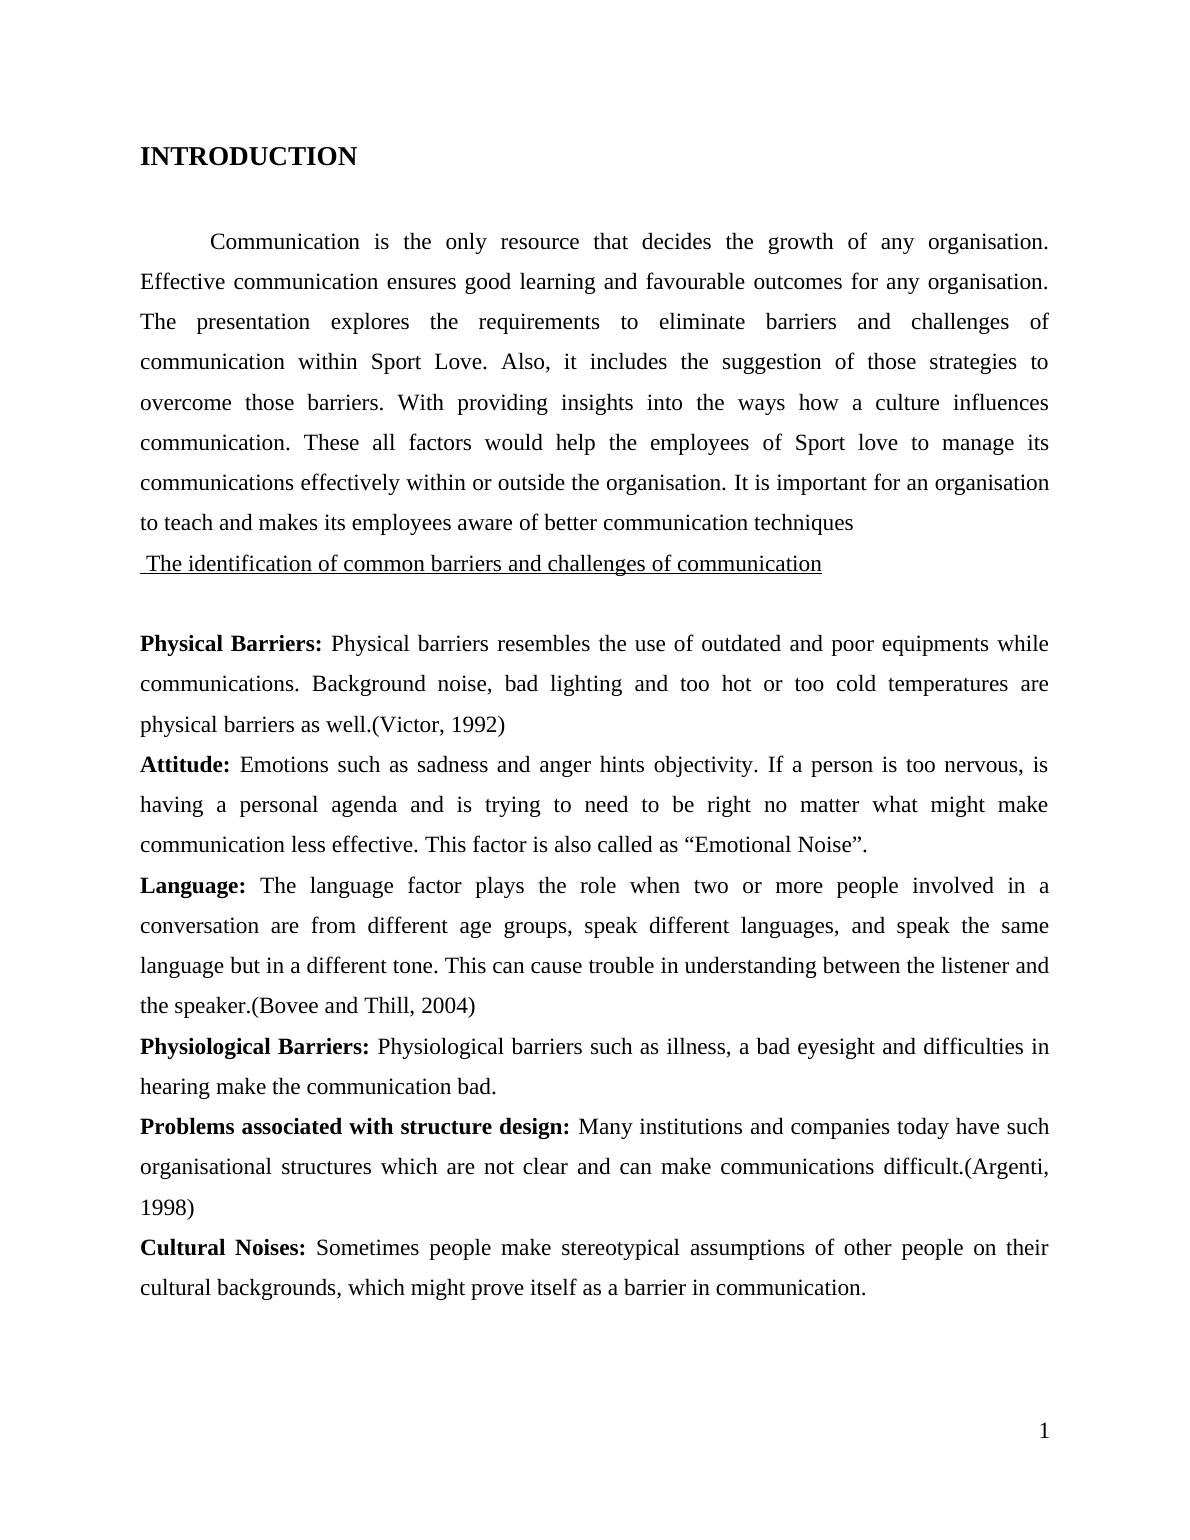 (PDF) Business Communication Assignment - Sport Love_3